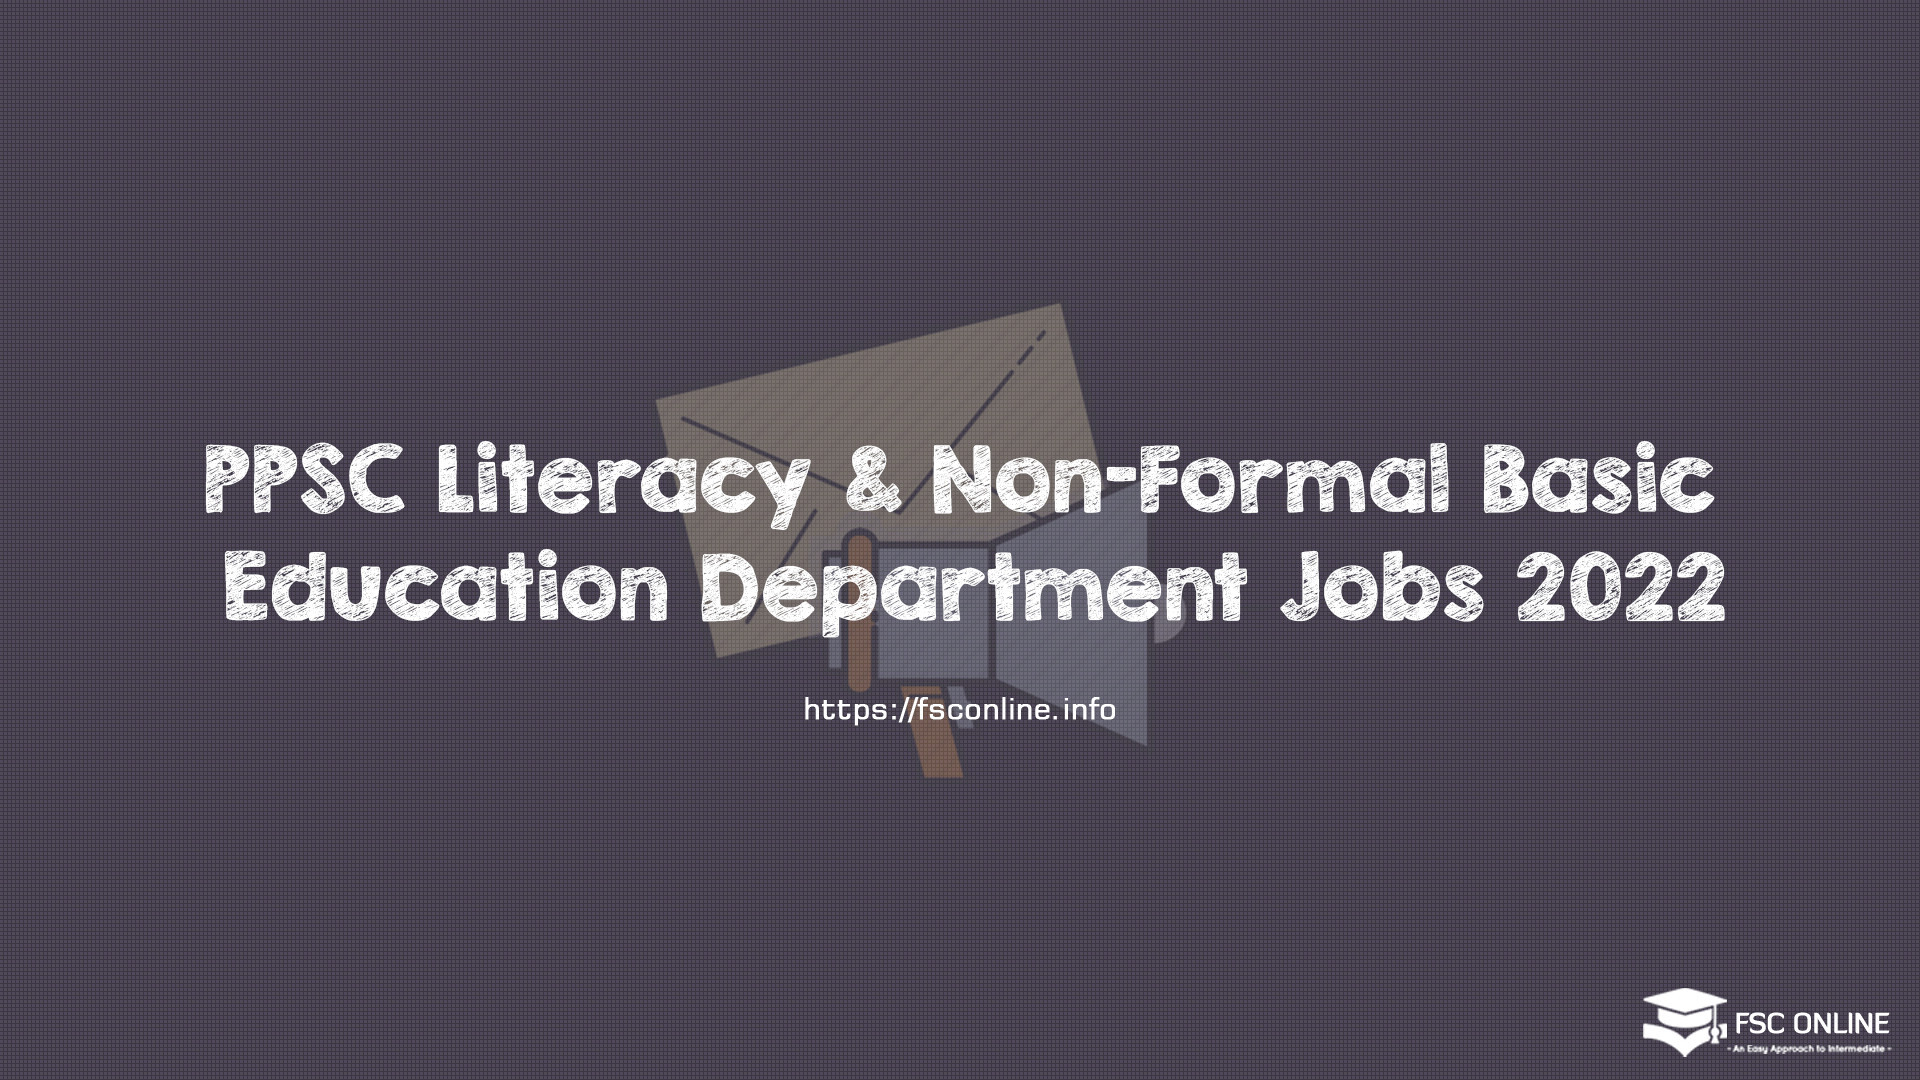 PPSC Literacy & Non-Formal Basic Education Department Jobs 2022